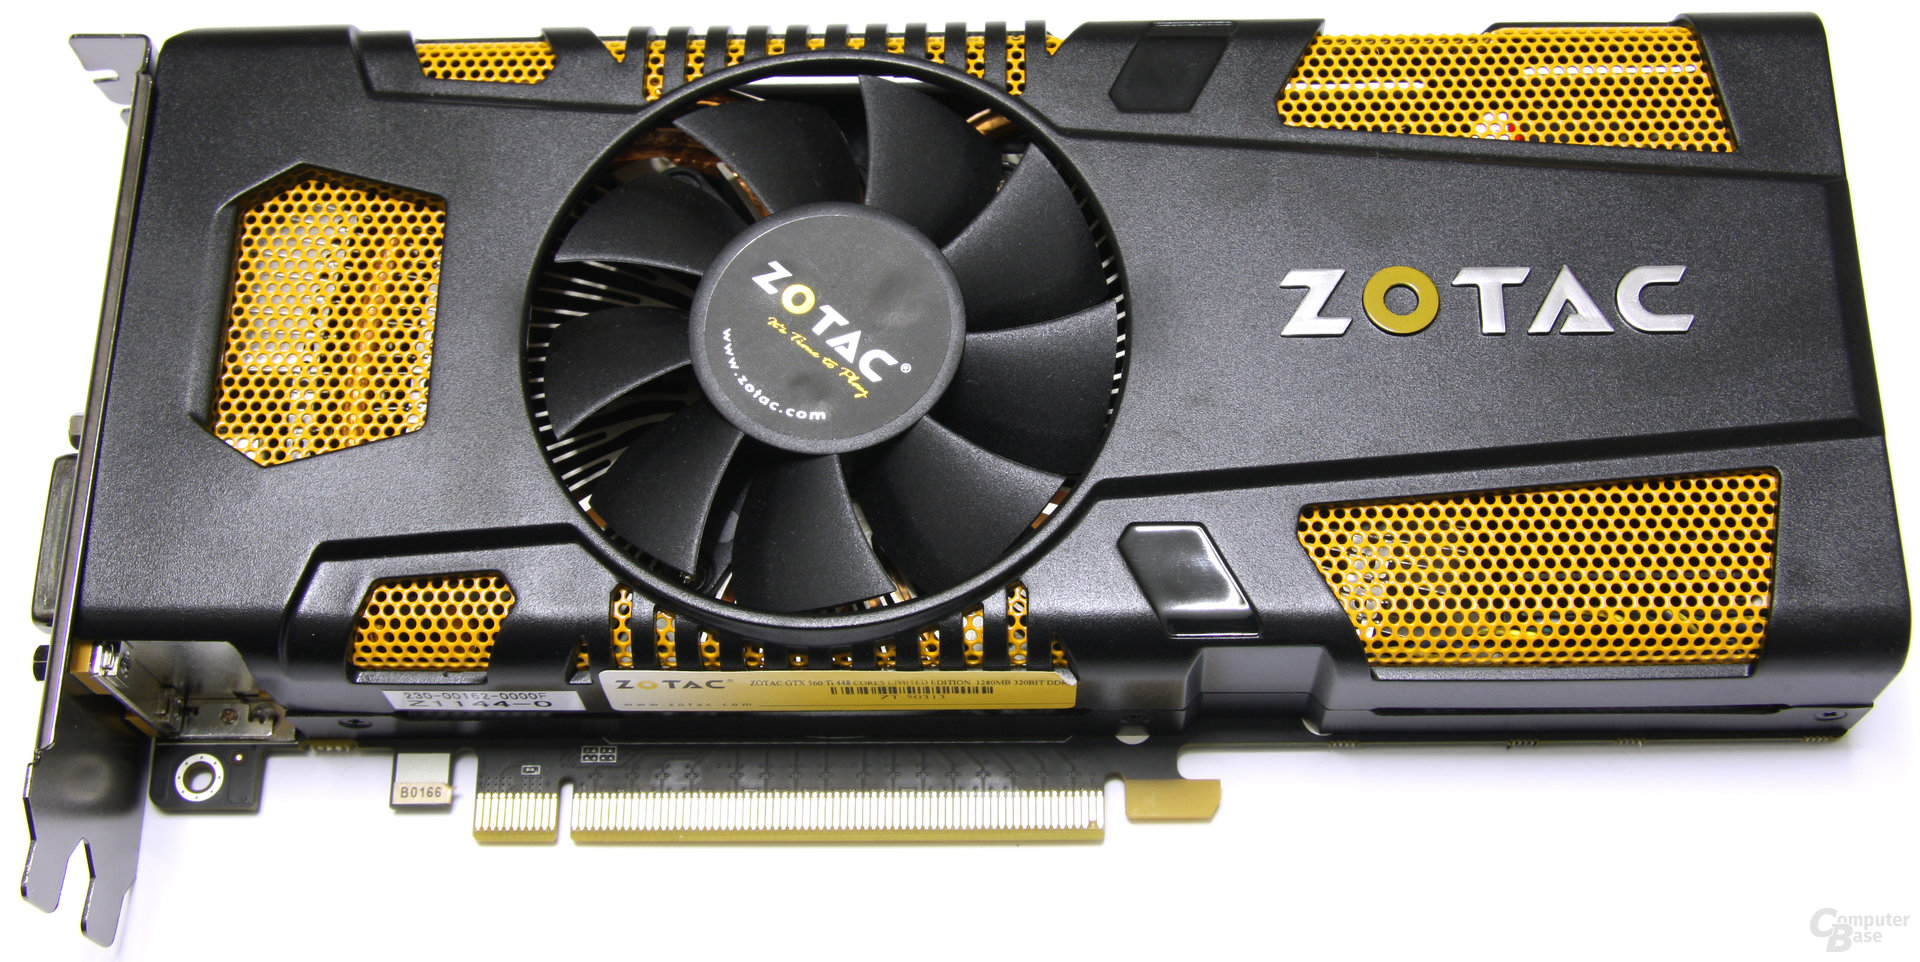 Zotac GeForce GTX 560 Ti 448 Core LE